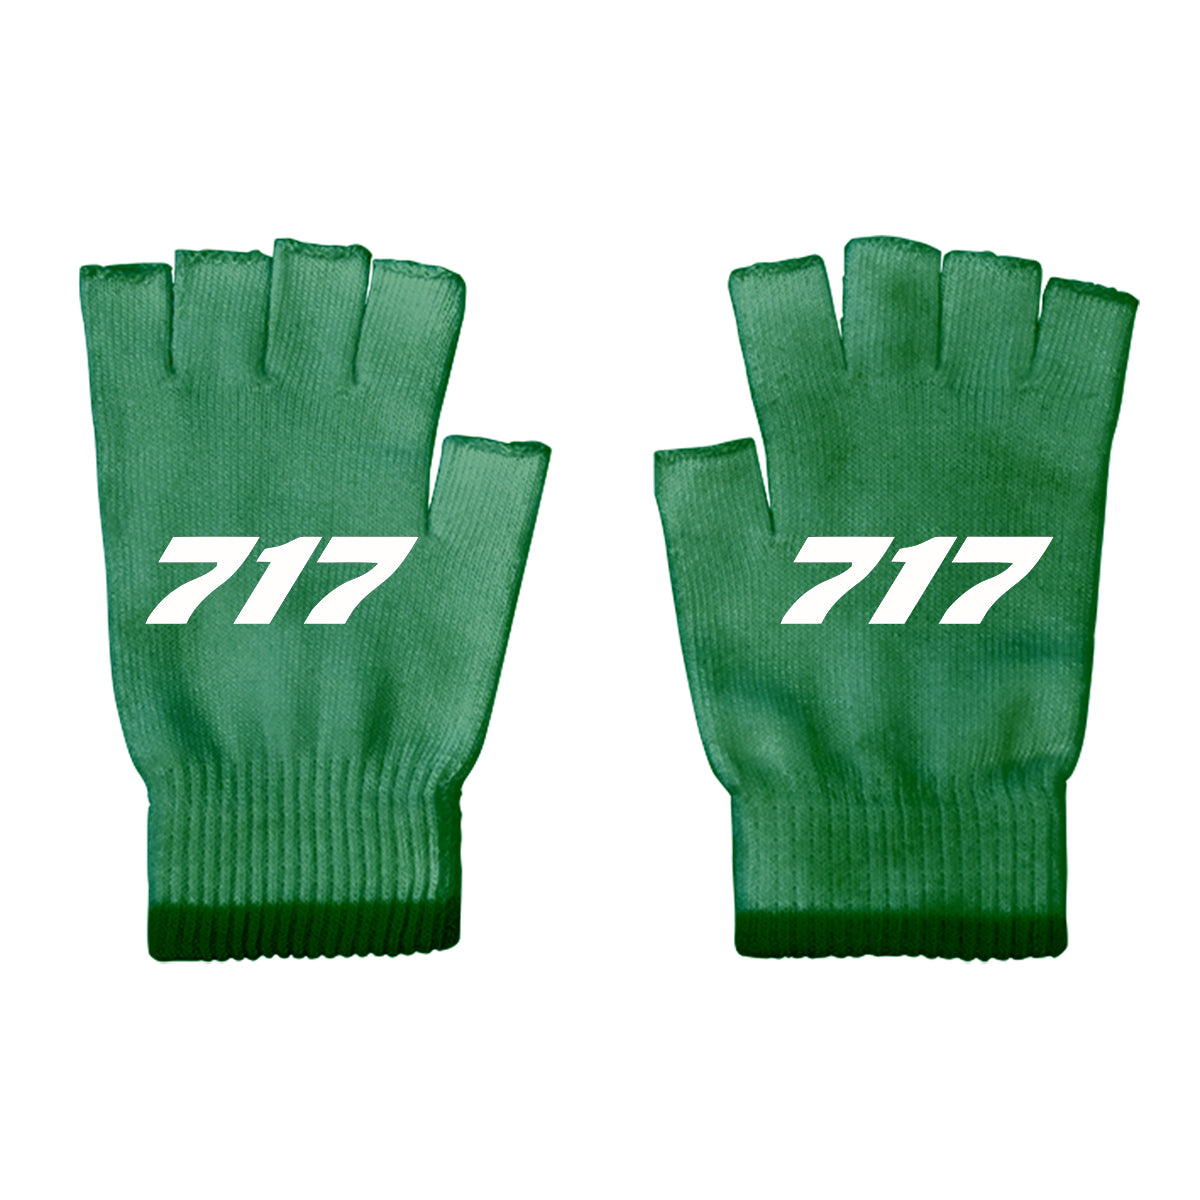 717 Flat Text Designed Cut Gloves